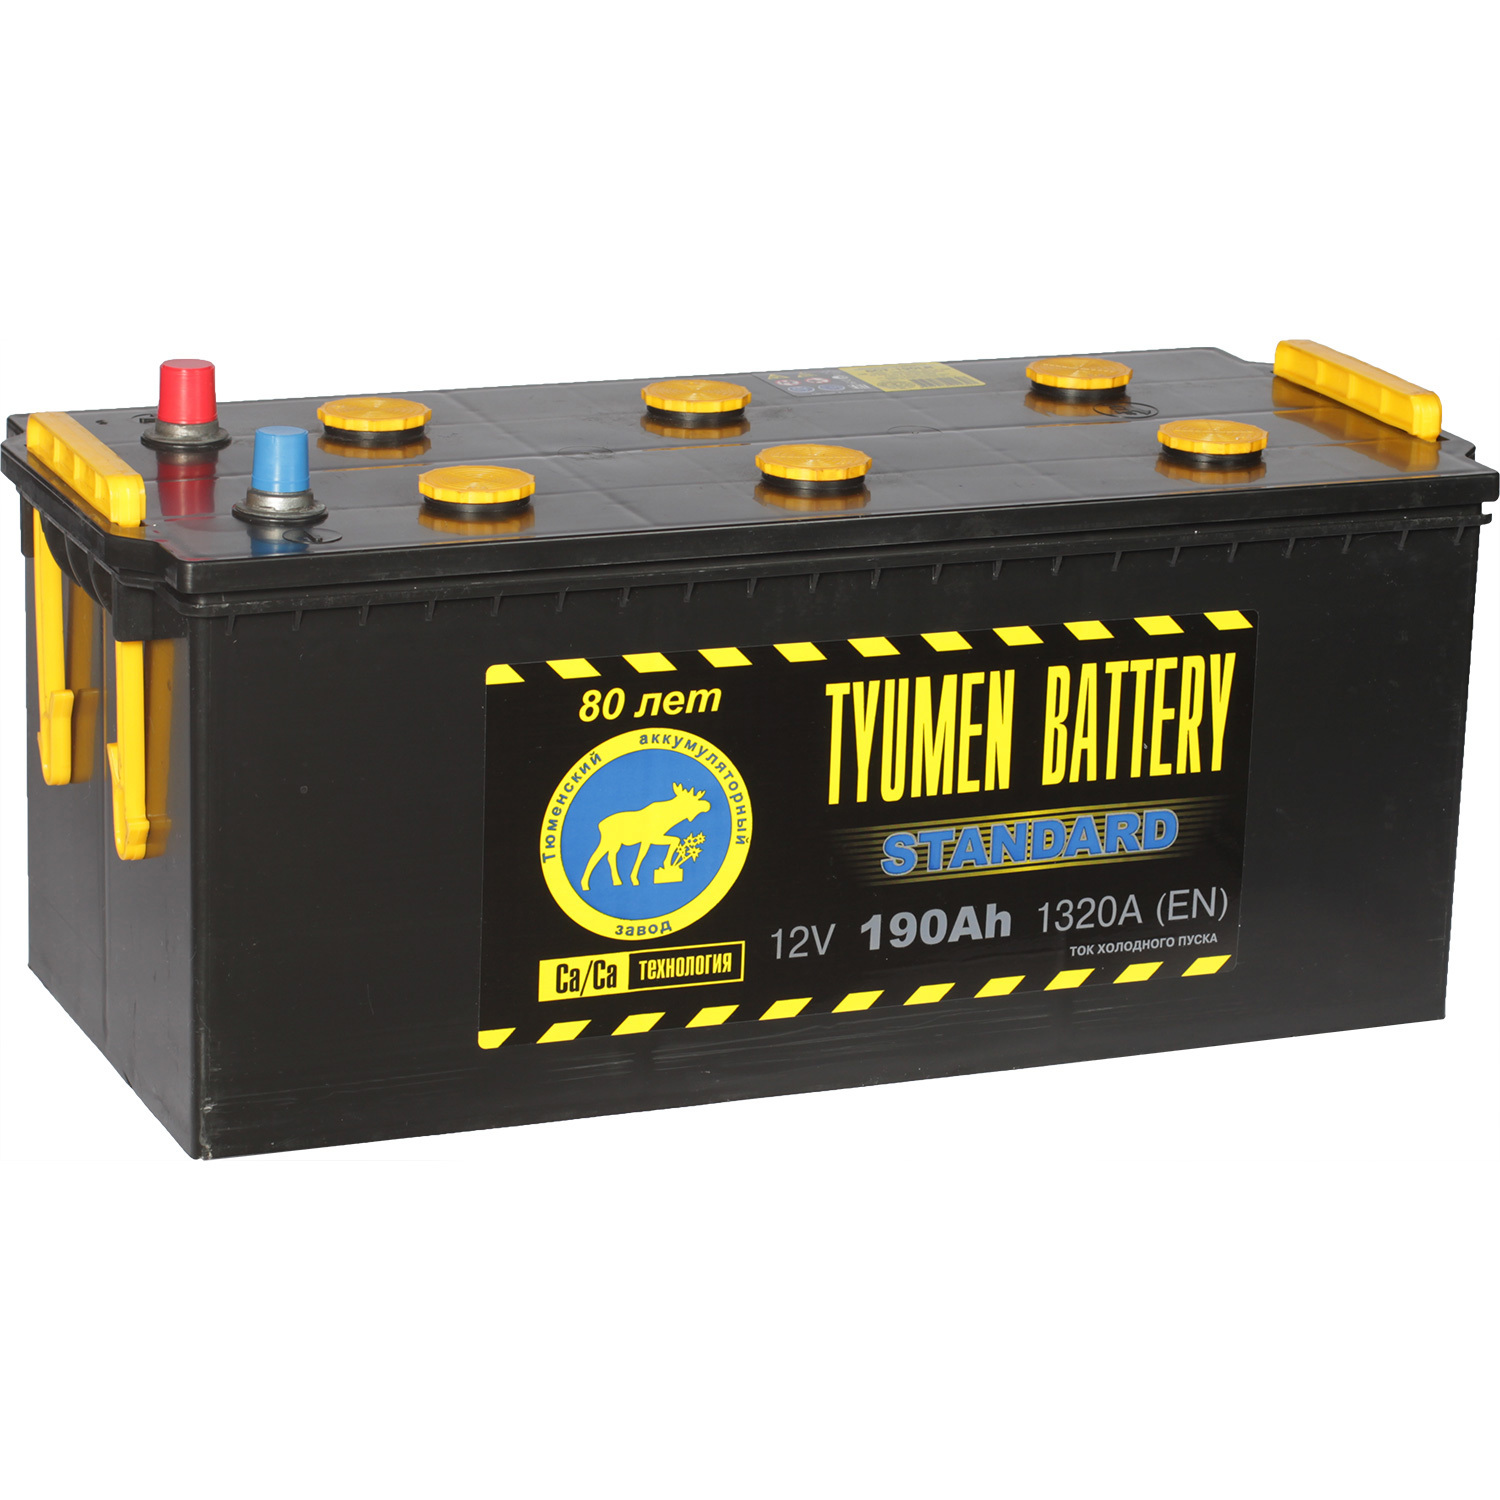 Tyumen Battery Грузовой аккумулятор Tyumen Battery Standard 190Ач о/п конус tyumen batbear грузовой аккумулятор tyumen batbear 6ст 190 а3 190ач п п болт